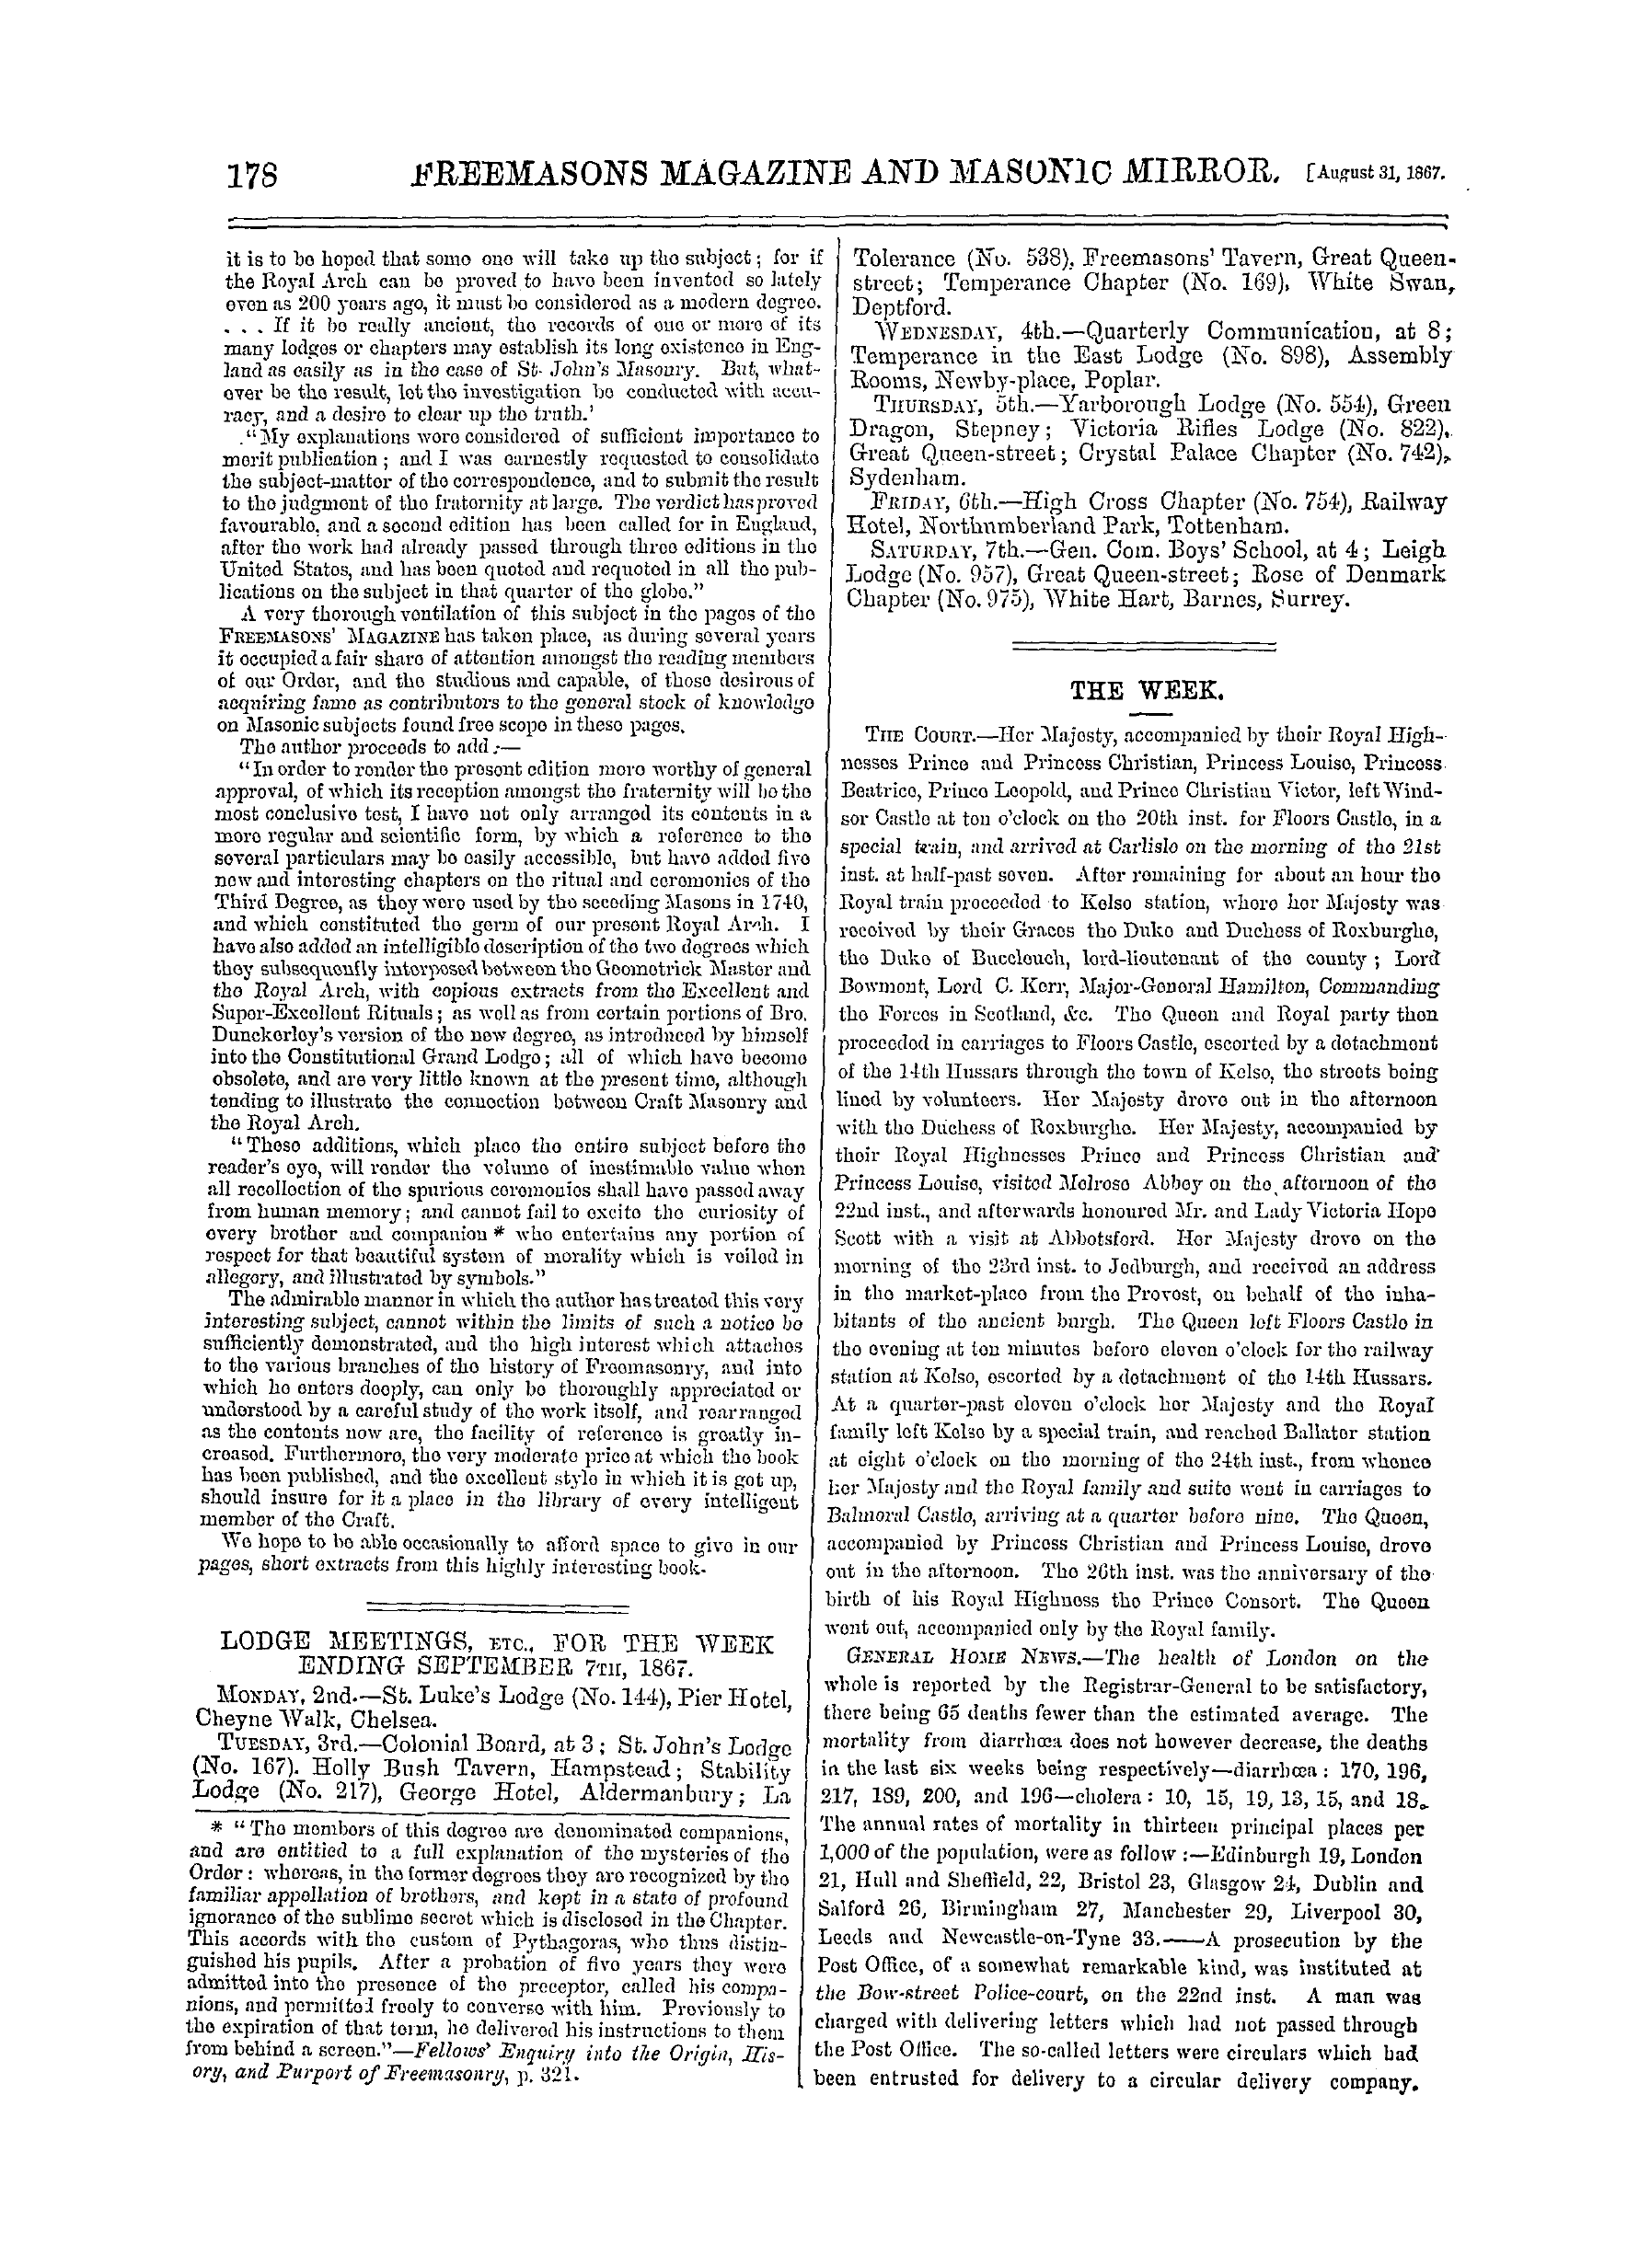 The Freemasons' Monthly Magazine: 1867-08-31 - Reviews.